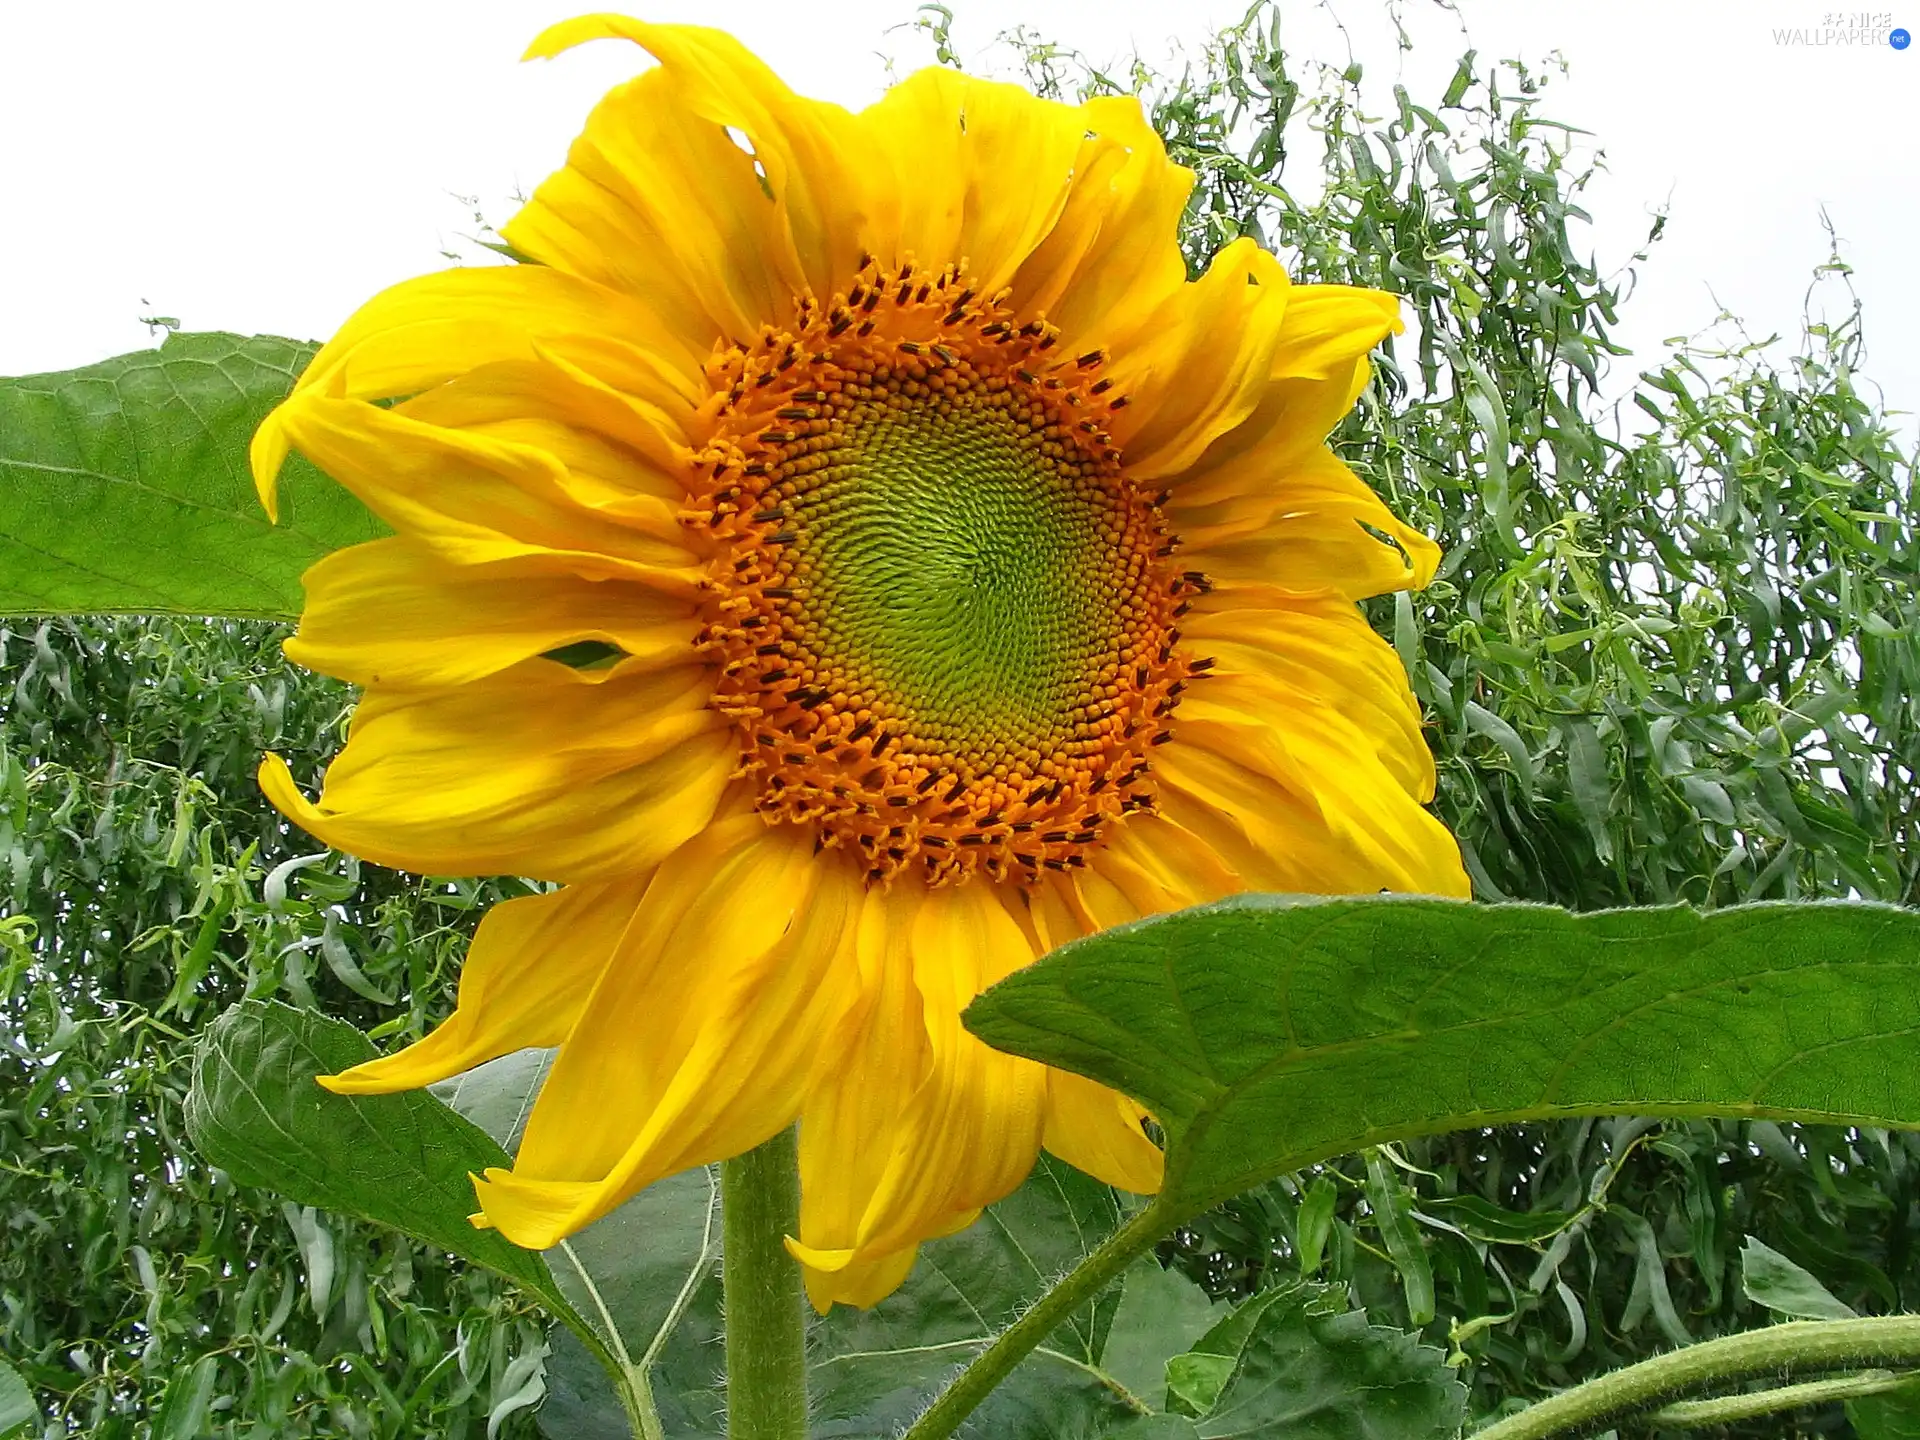 Leaf, Sunflower, decorated